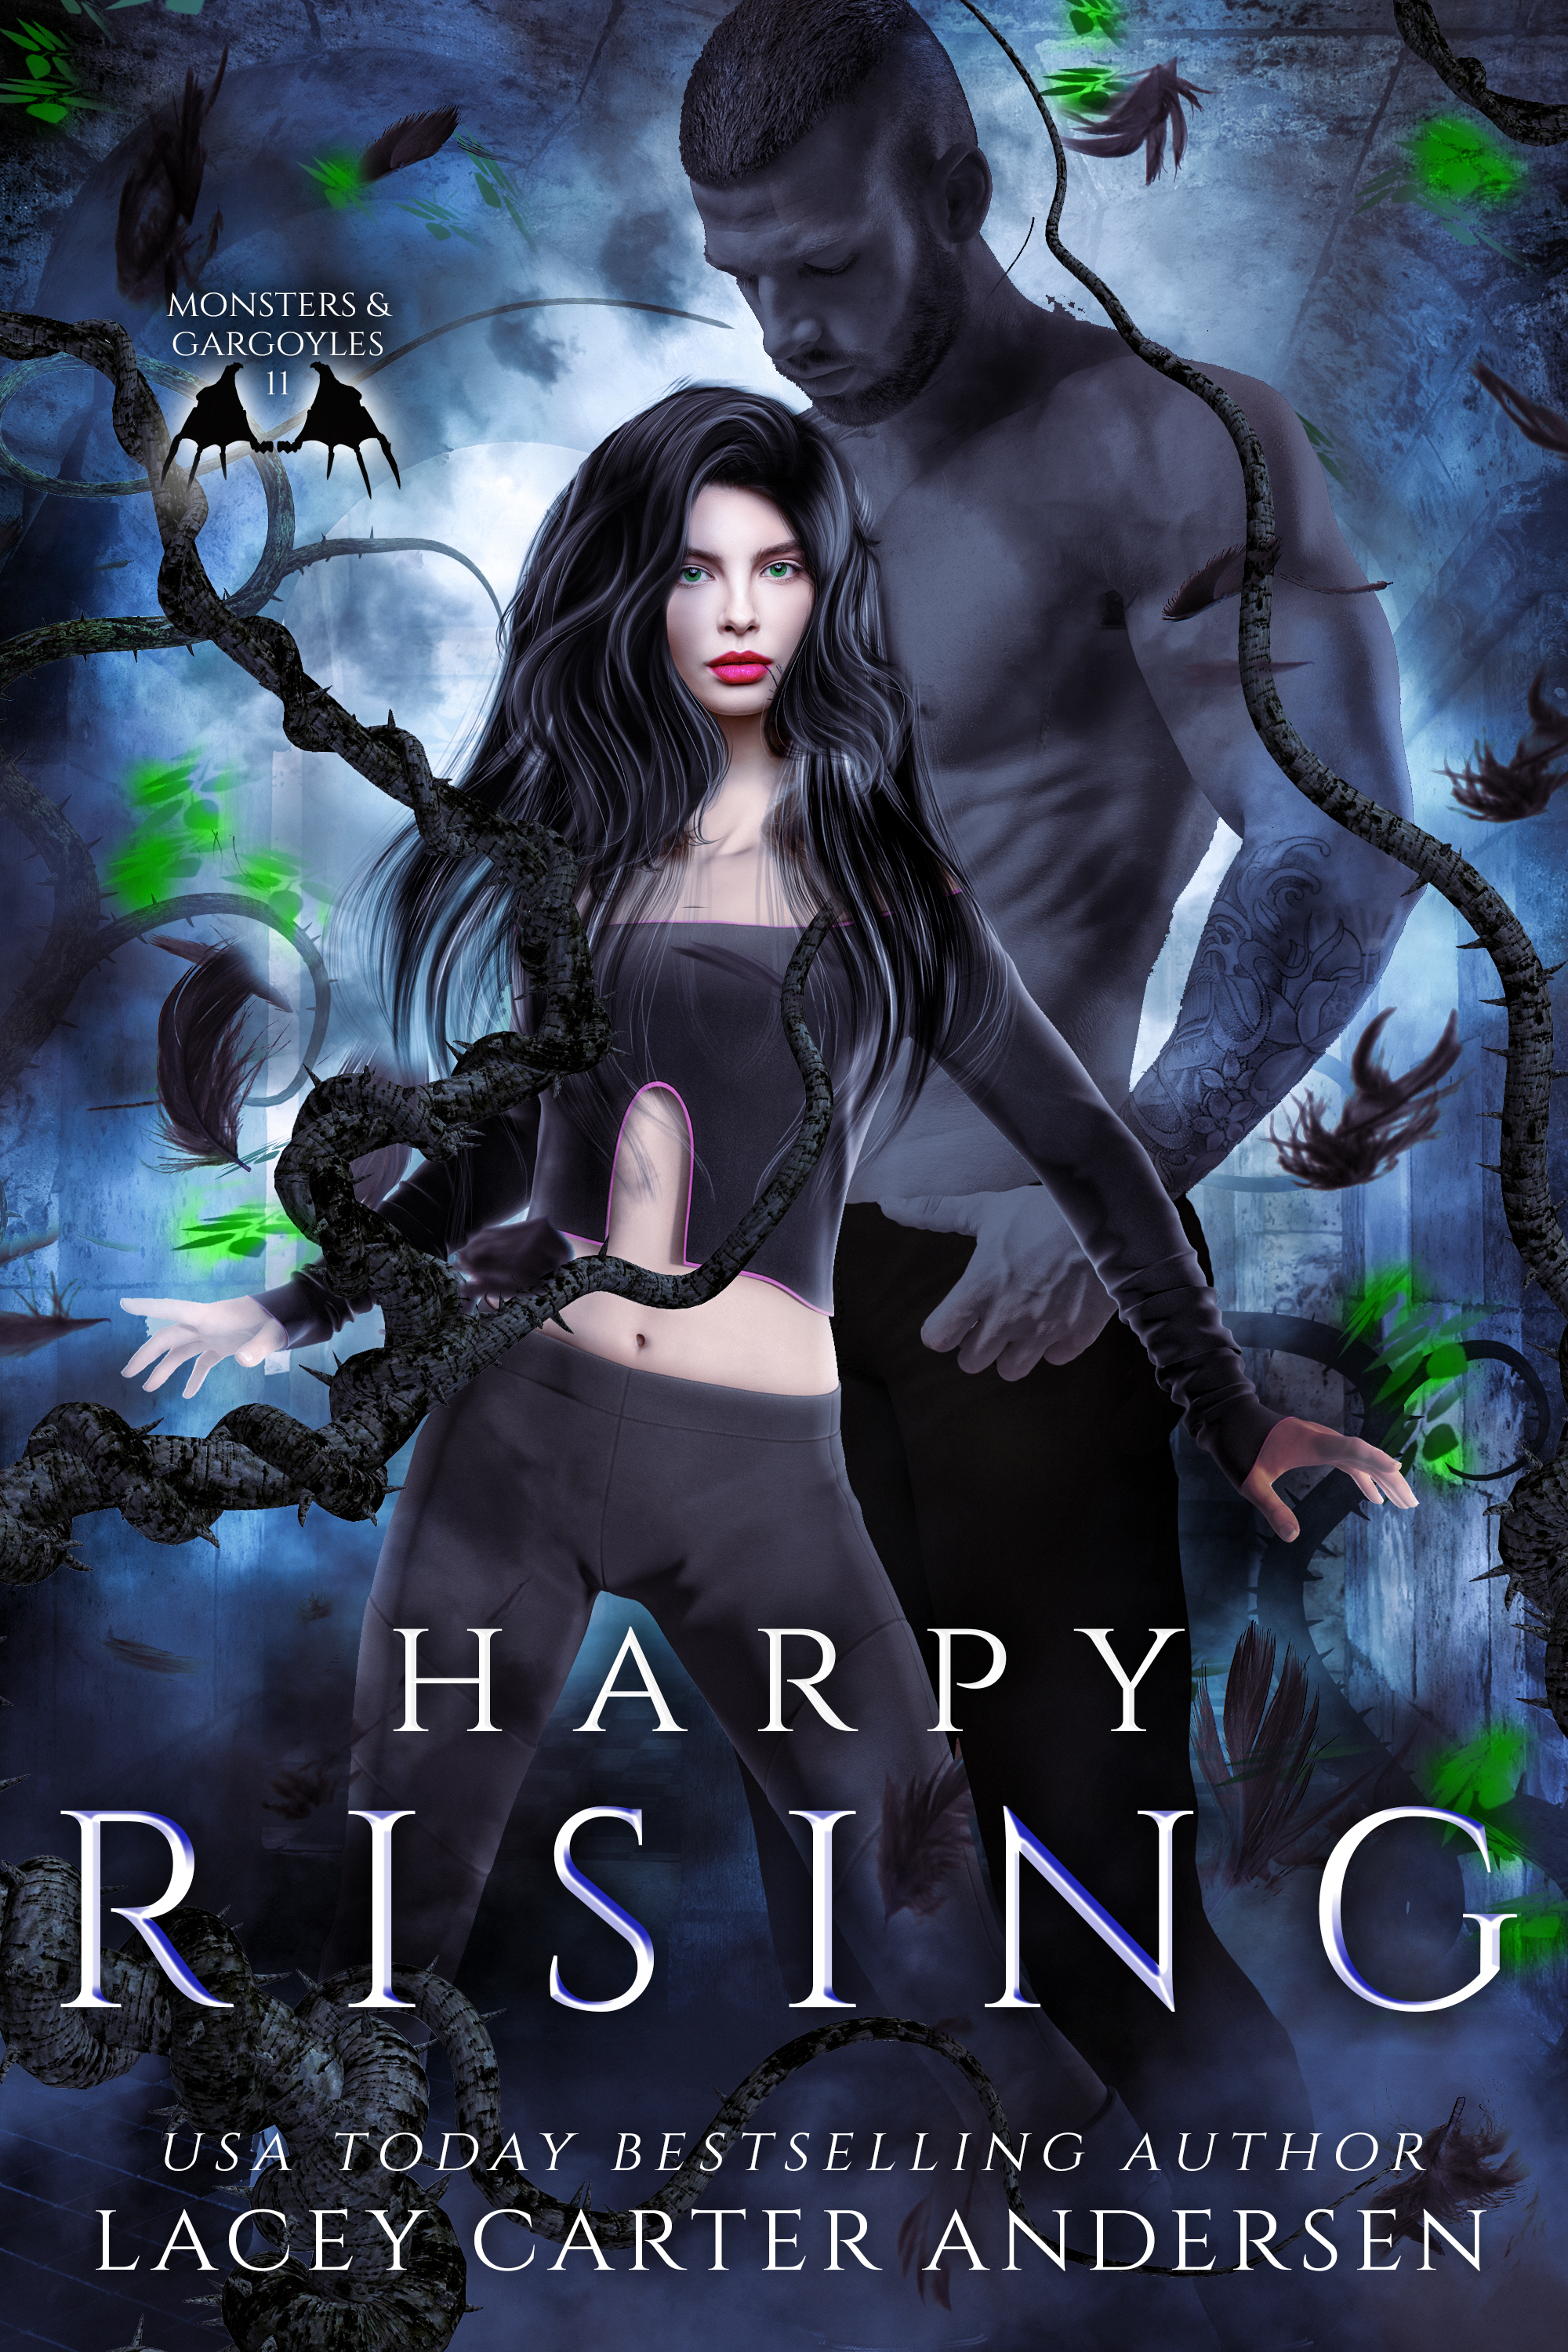 11.Harpy Rising